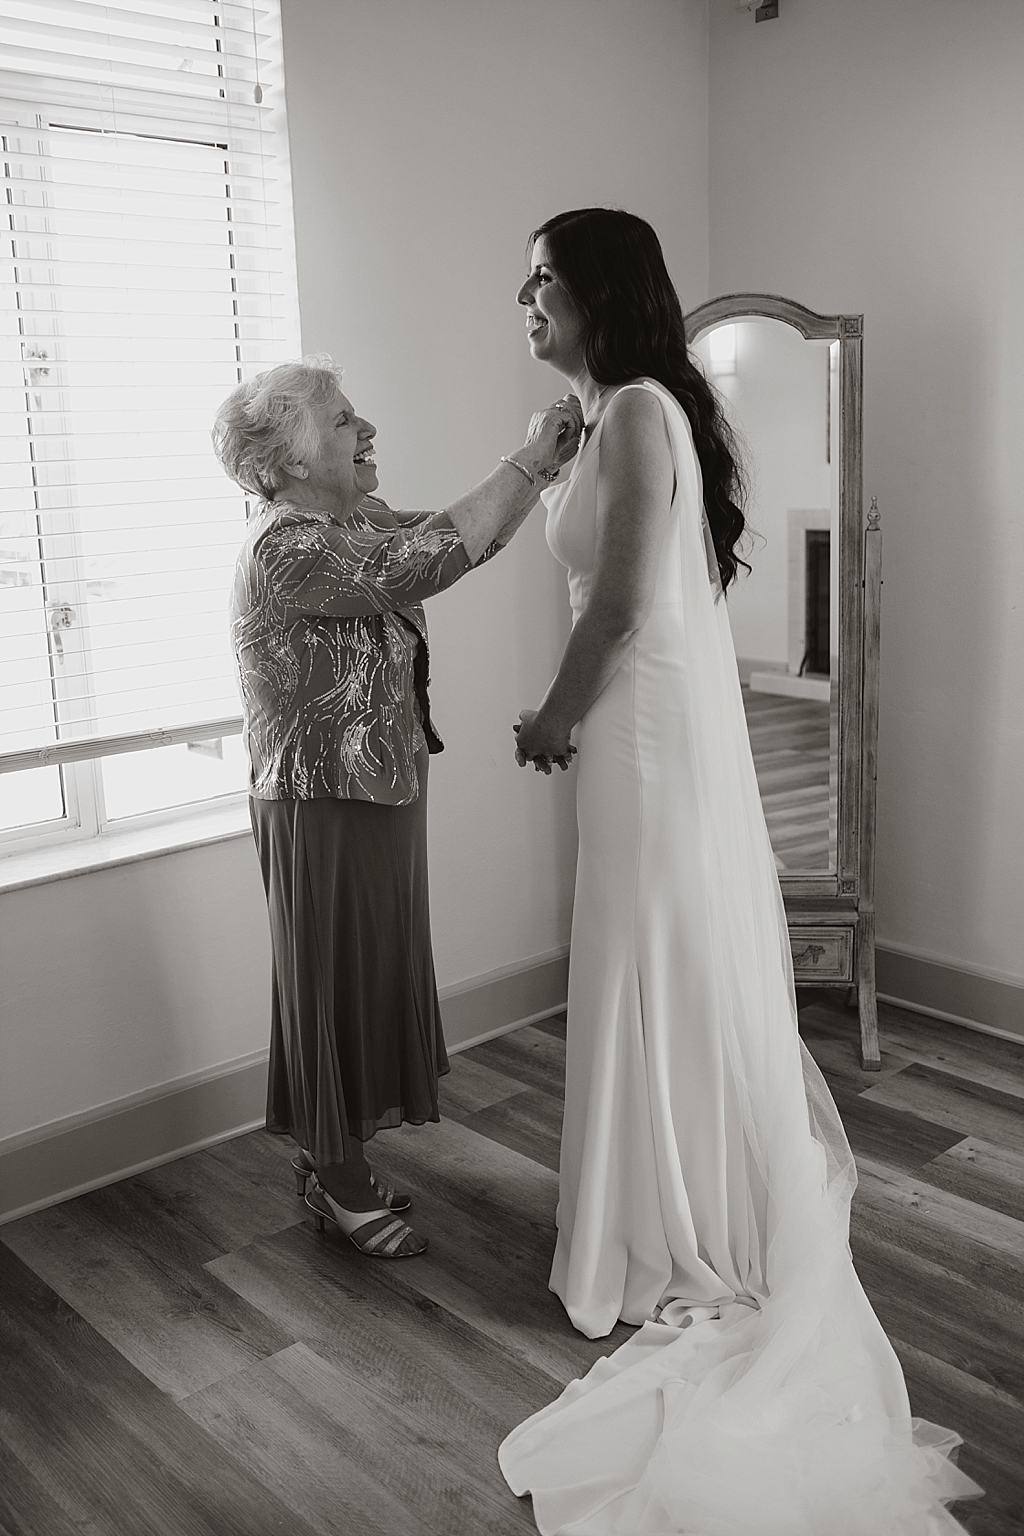 grandma helping bride with jewelry